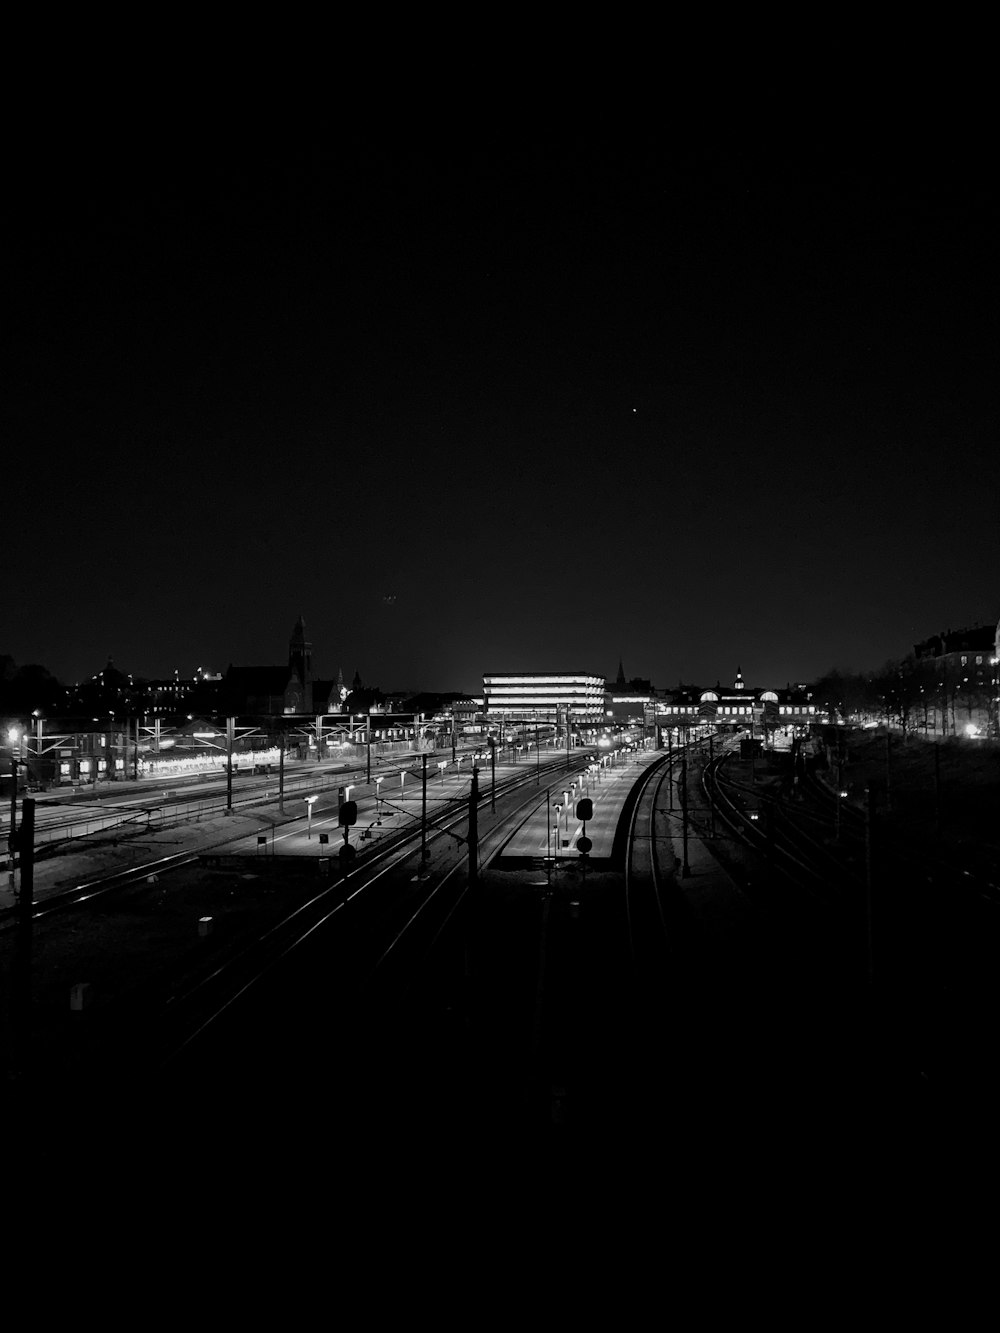 a city landscape at night